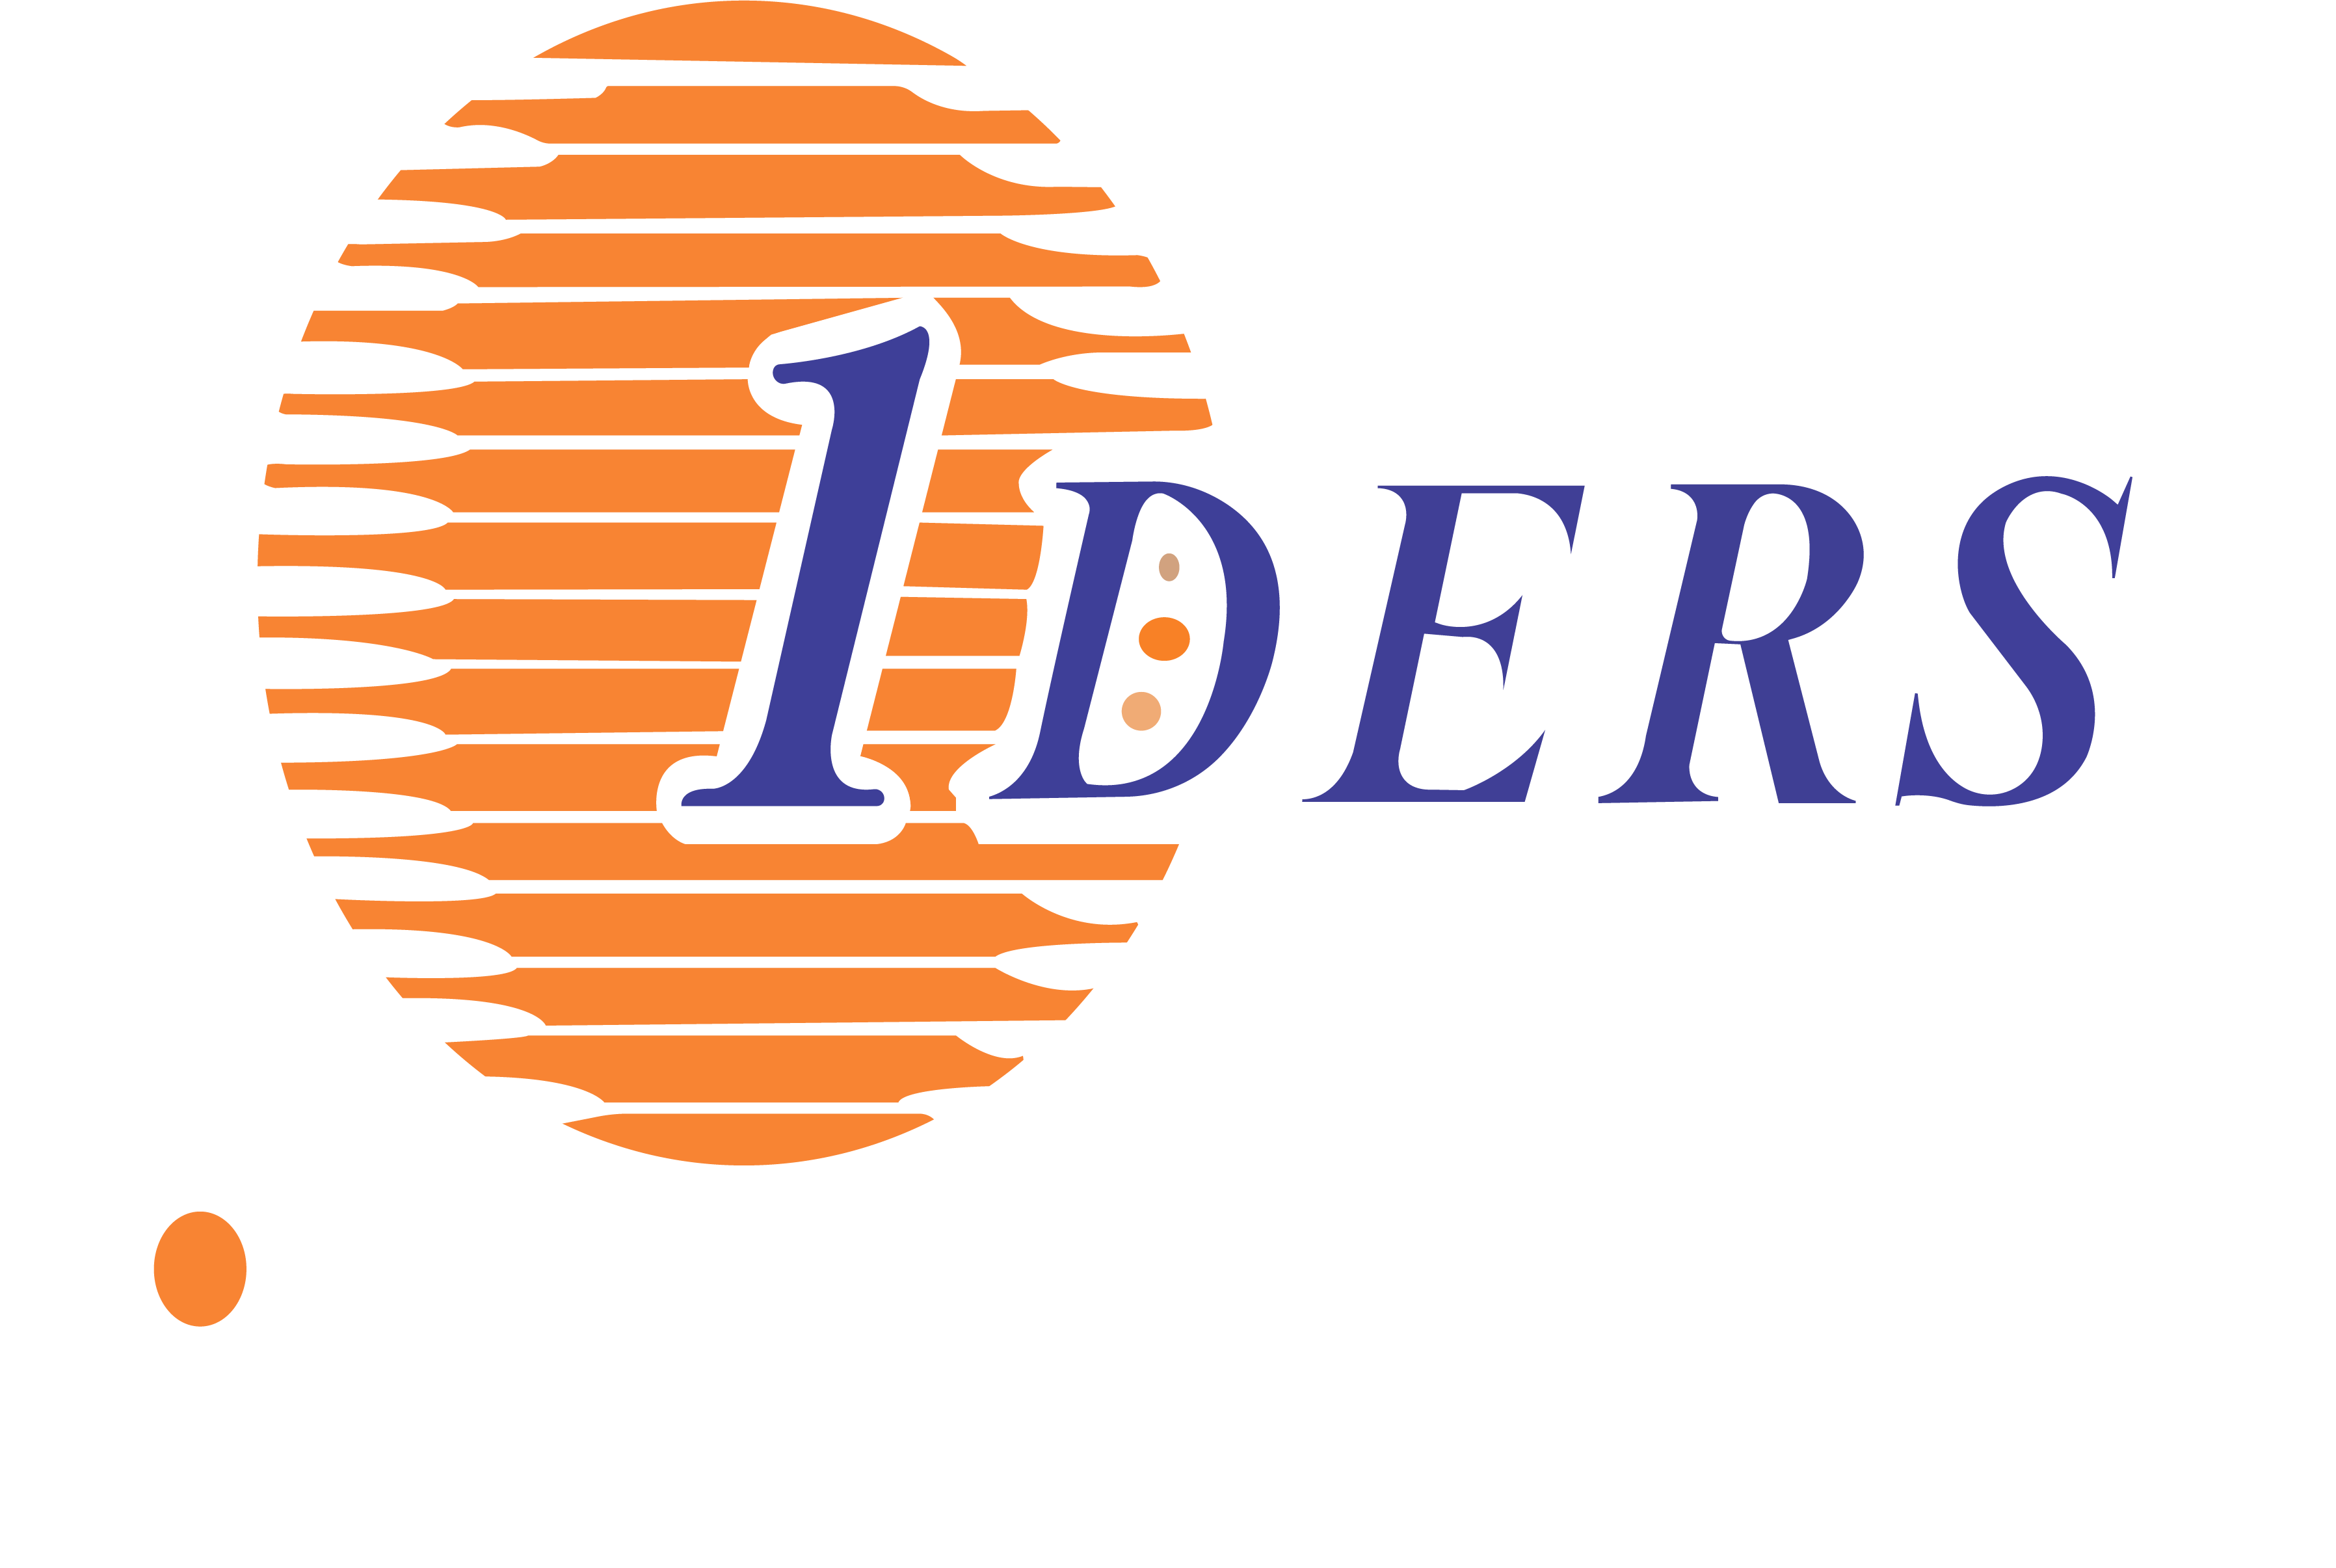 1ders Events Solutions Pvt Ltd